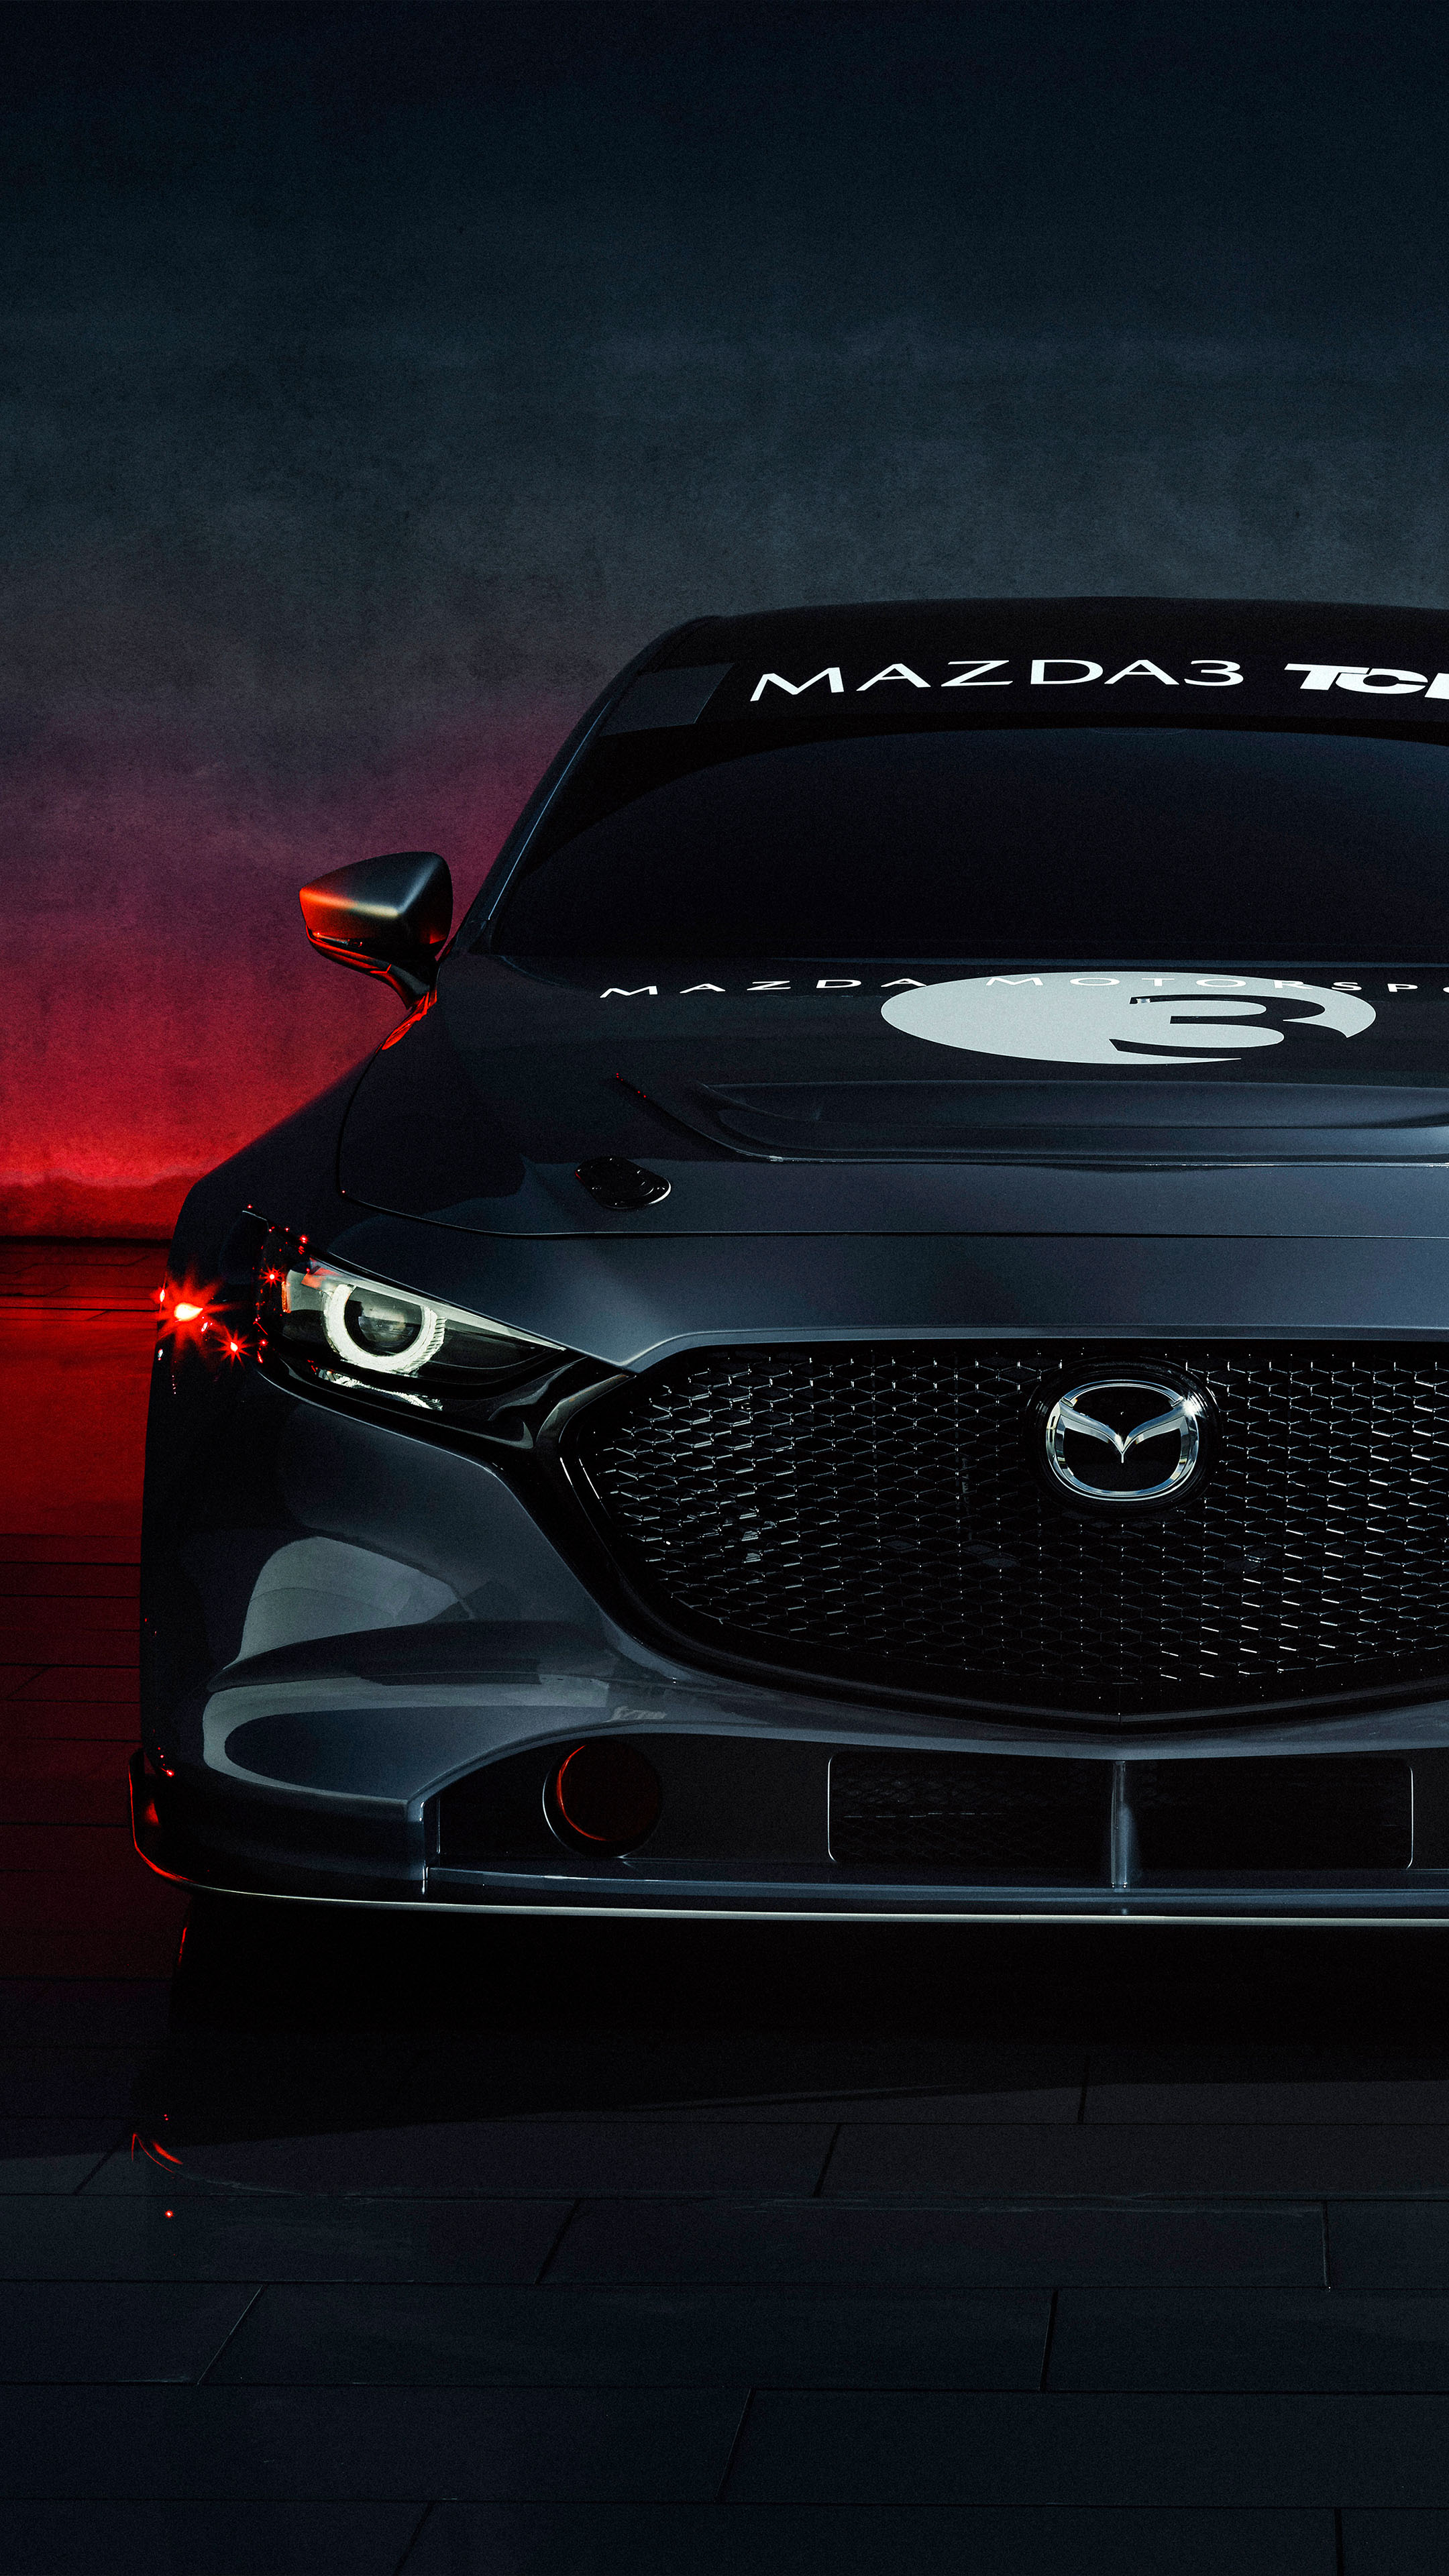 Mazda 3 TCR Race Car 2020 Free 4K Ultra HD Mobile Wallpaper